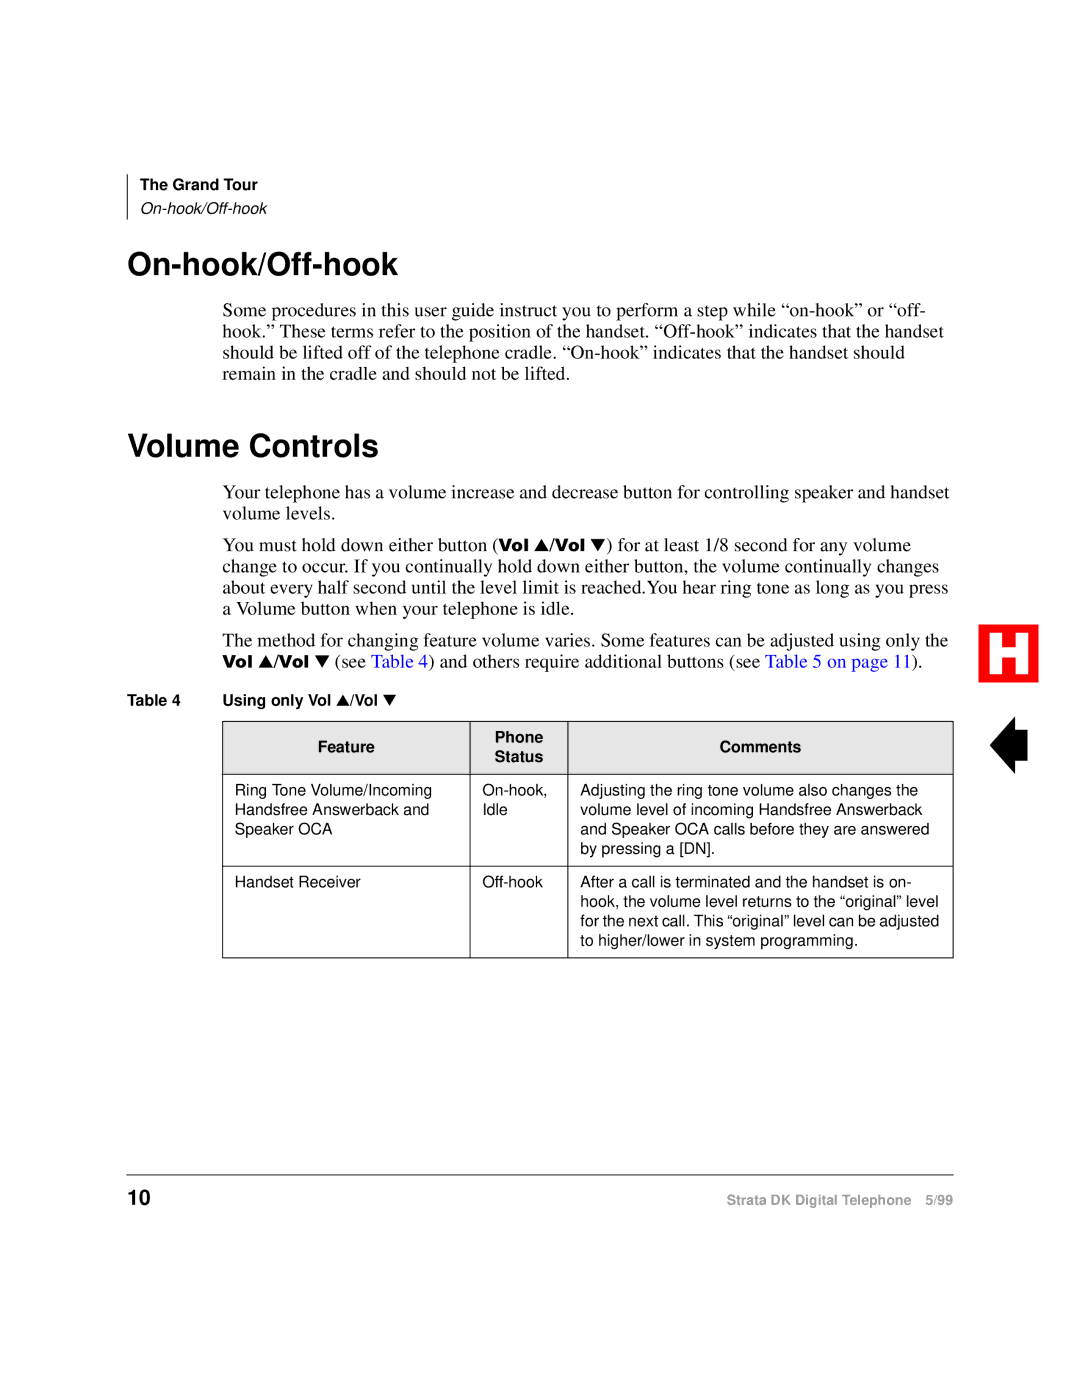 Toshiba Digital Telephone manual On-hook/Off-hook, Volume Controls 